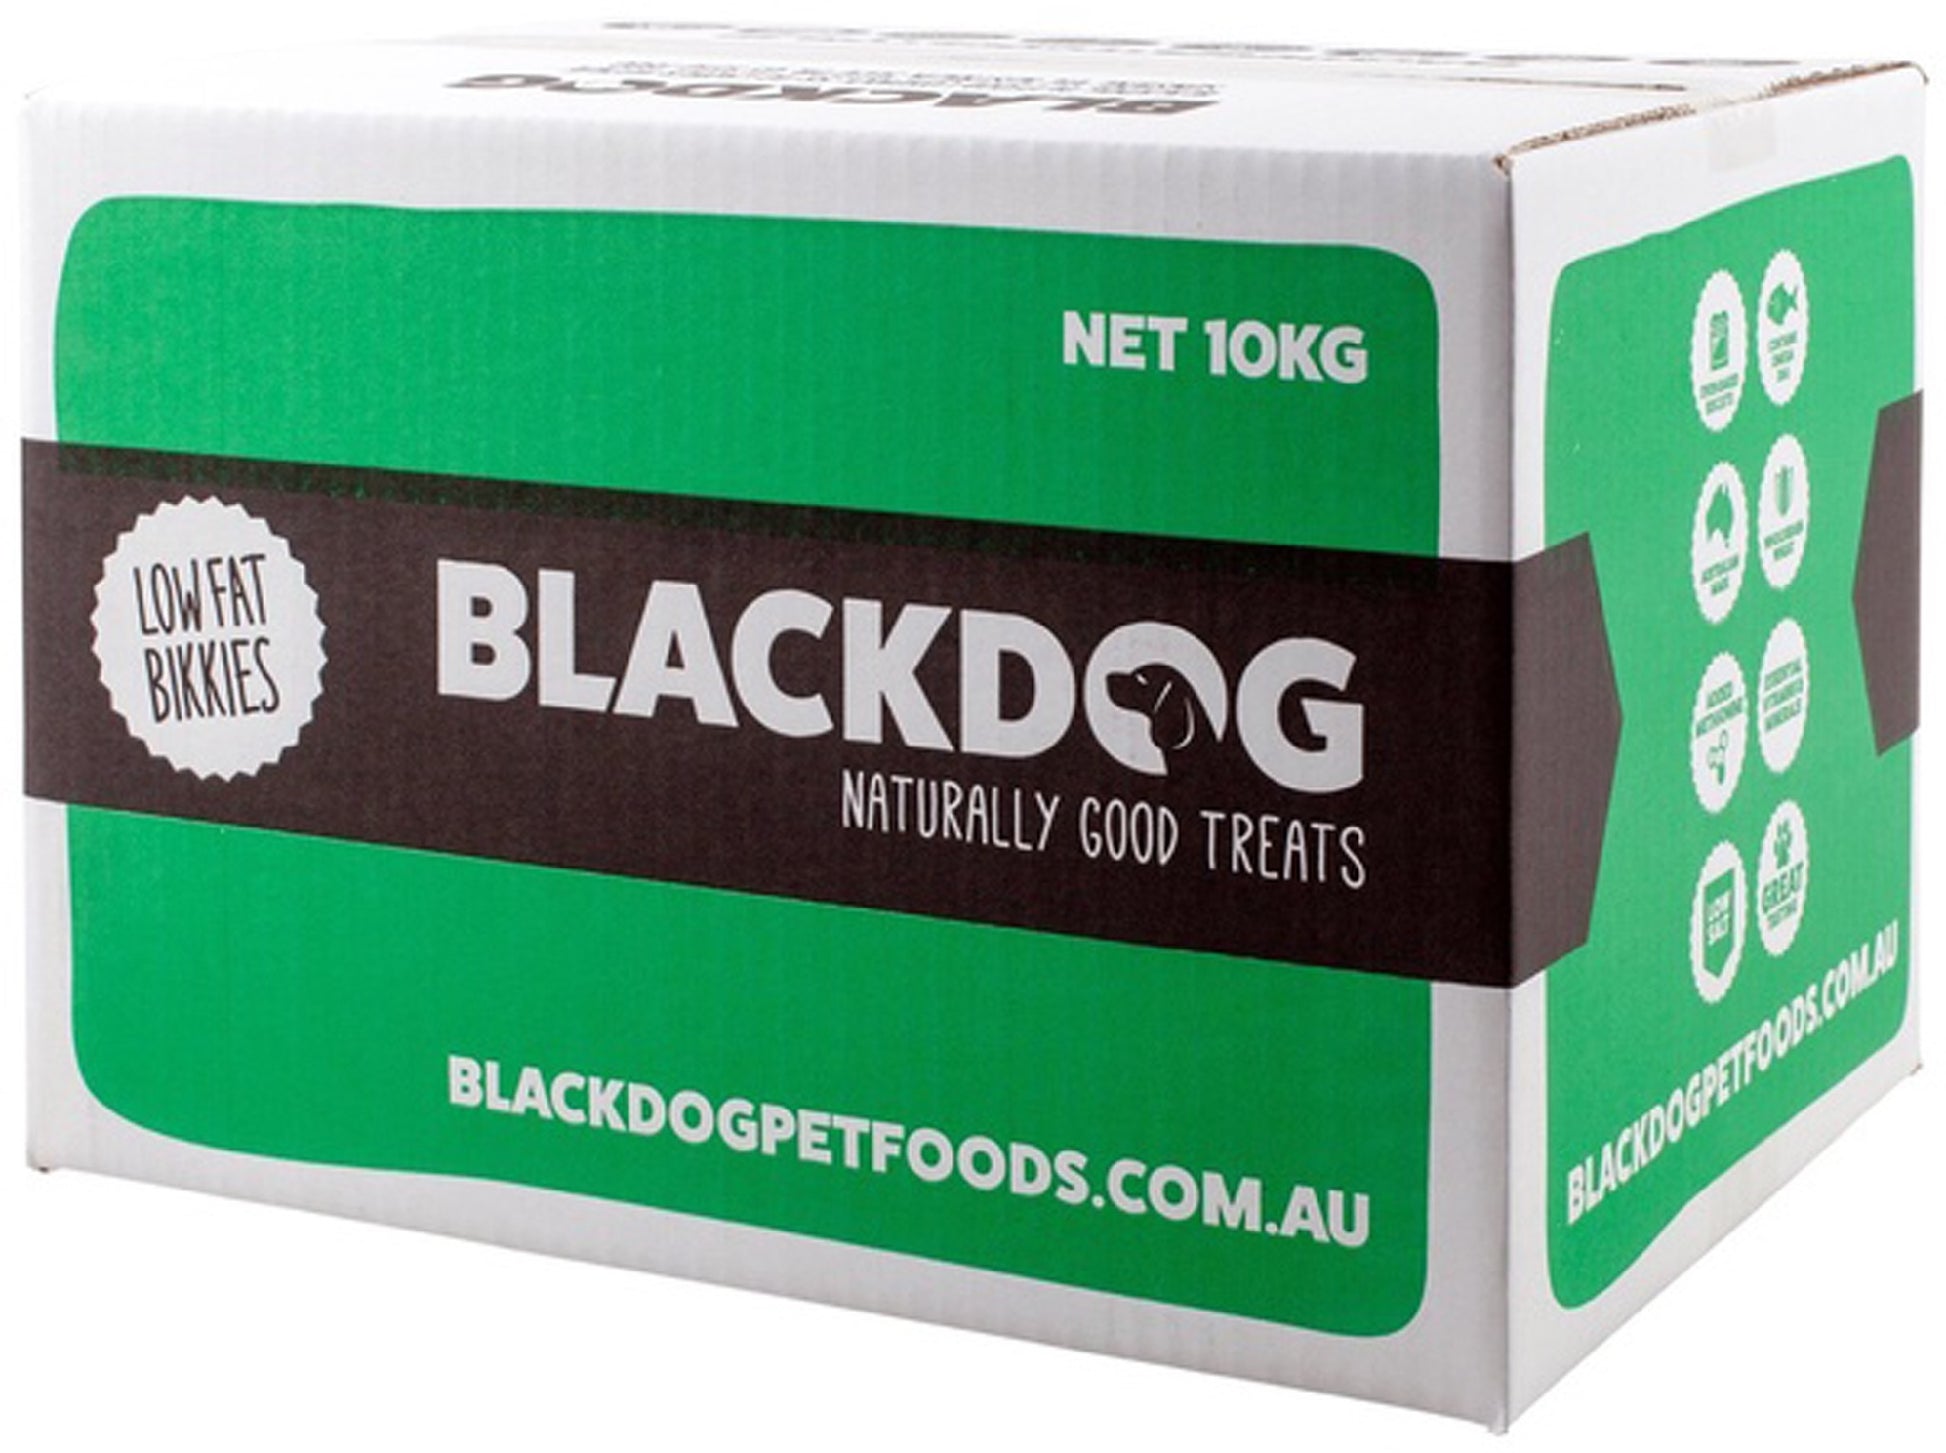 Box of Blackdog 10kg 4x2 inch dog biscuits